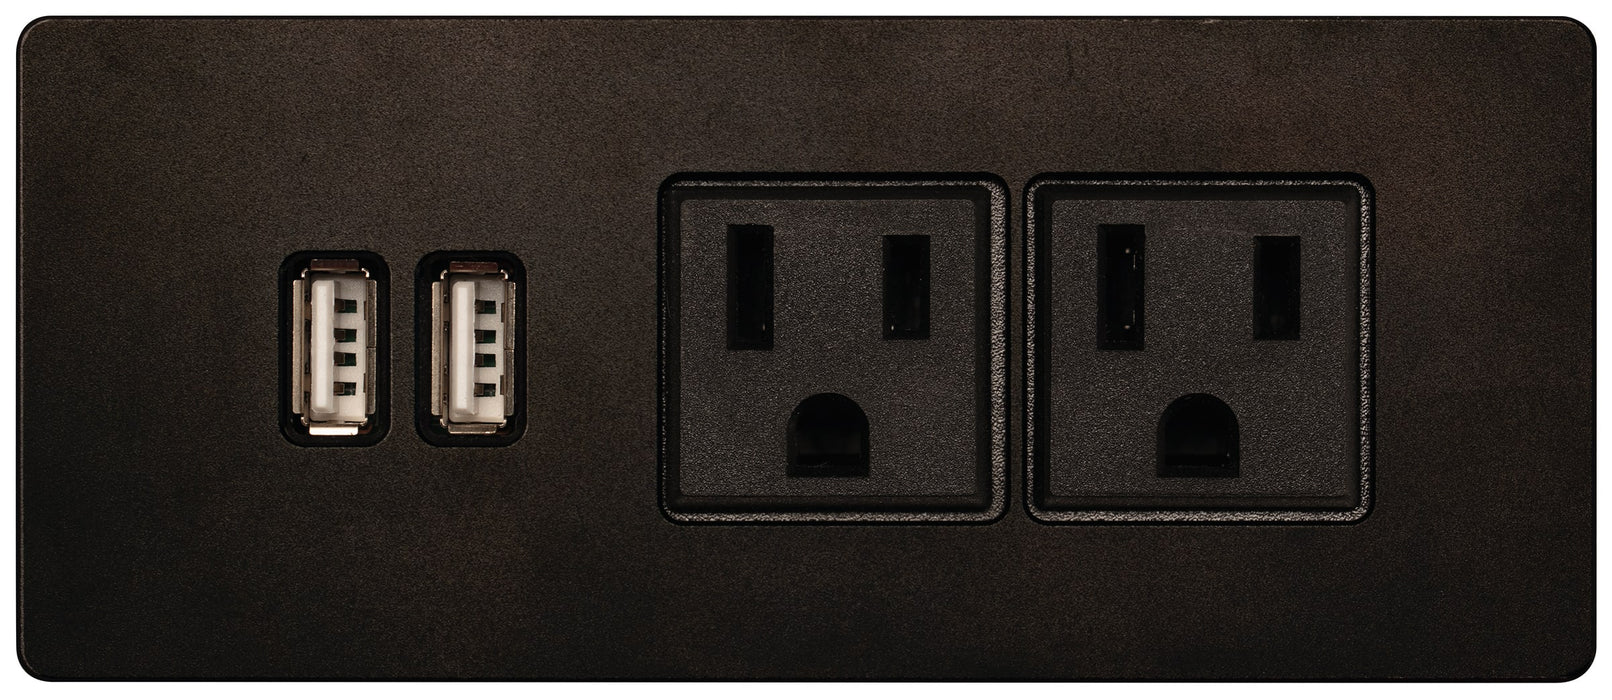 usb-power-hub-black-black-right-addon Black Face Plate / Black Outlet Right Facing